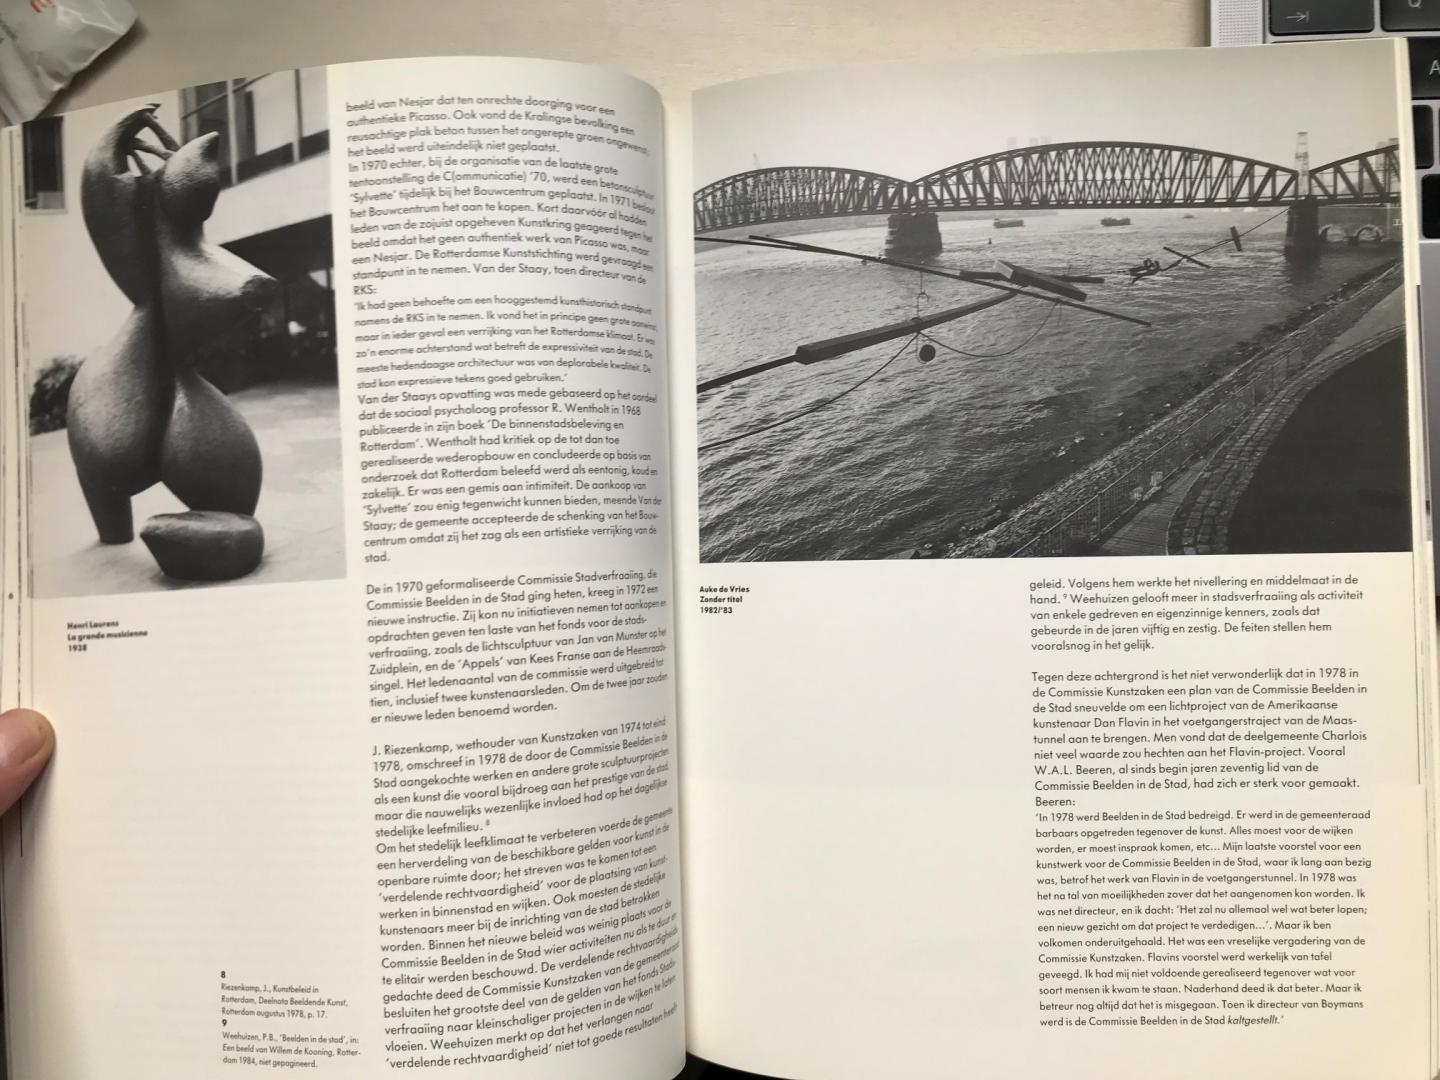 Adrichem, Jan van - Beeldende kunst en kunstbeleid in Rotterdam 1945 -1985